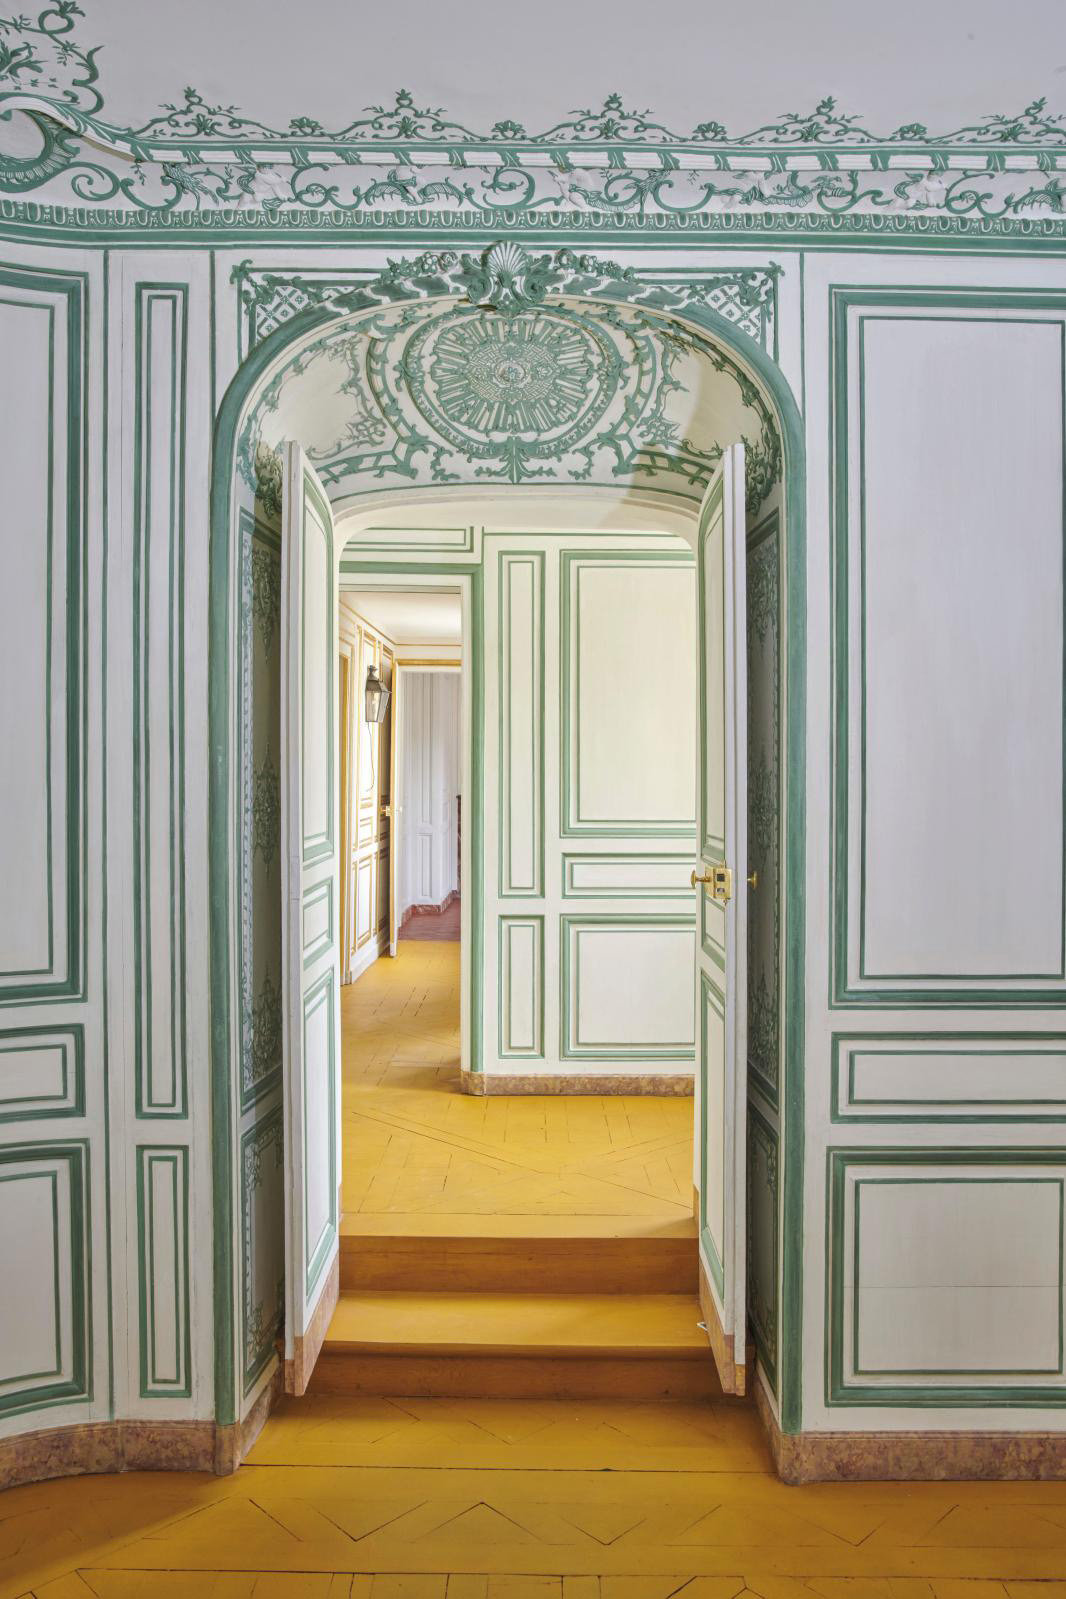 © Château de Versailles, Dist. RMN © Christophe Fouin